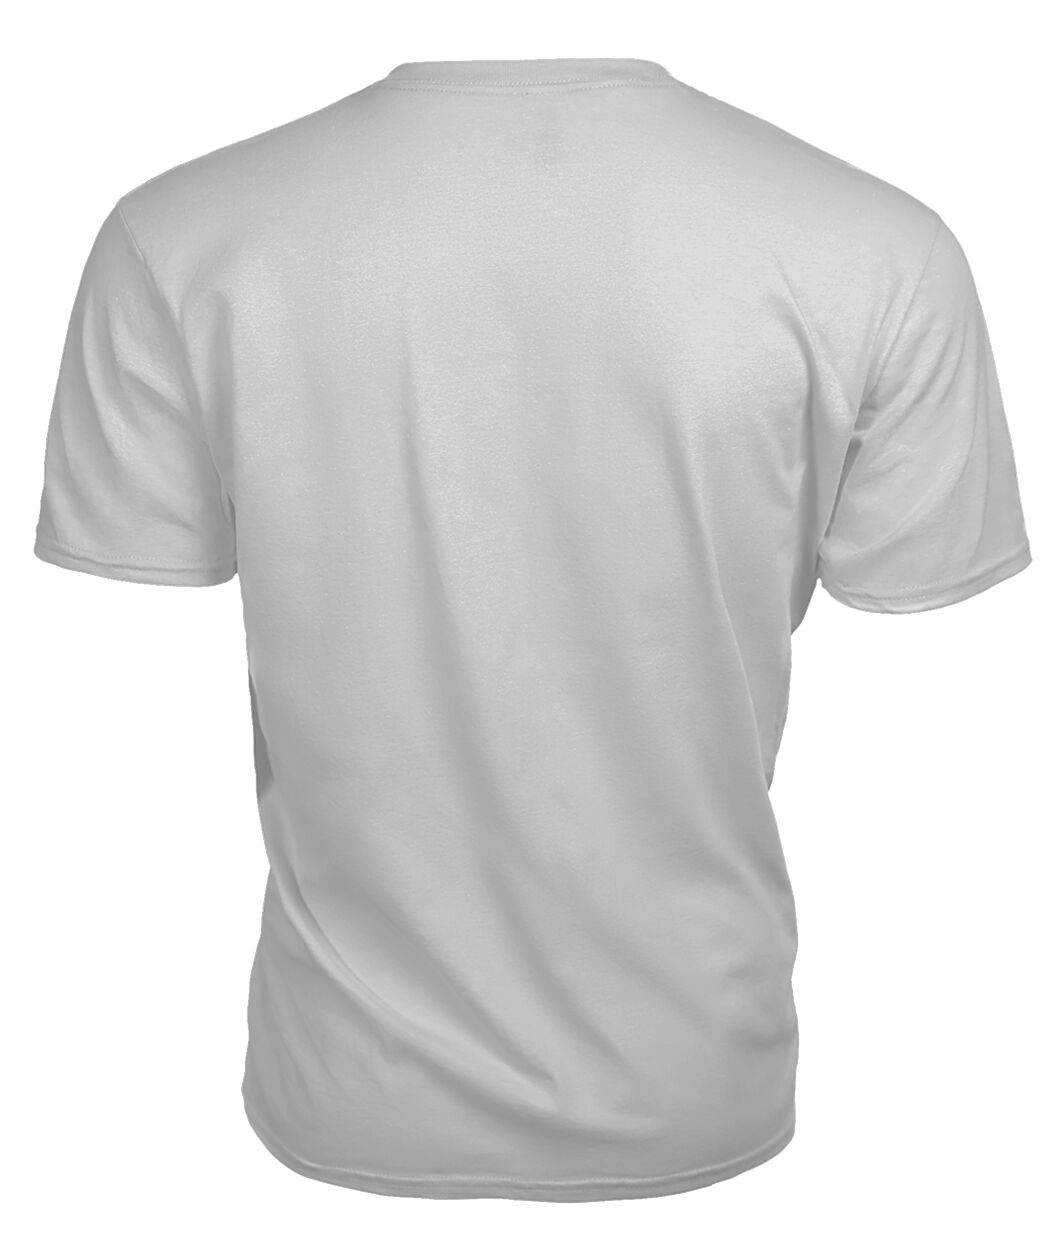 MacLennan Family Tartan - 2D T-shirt